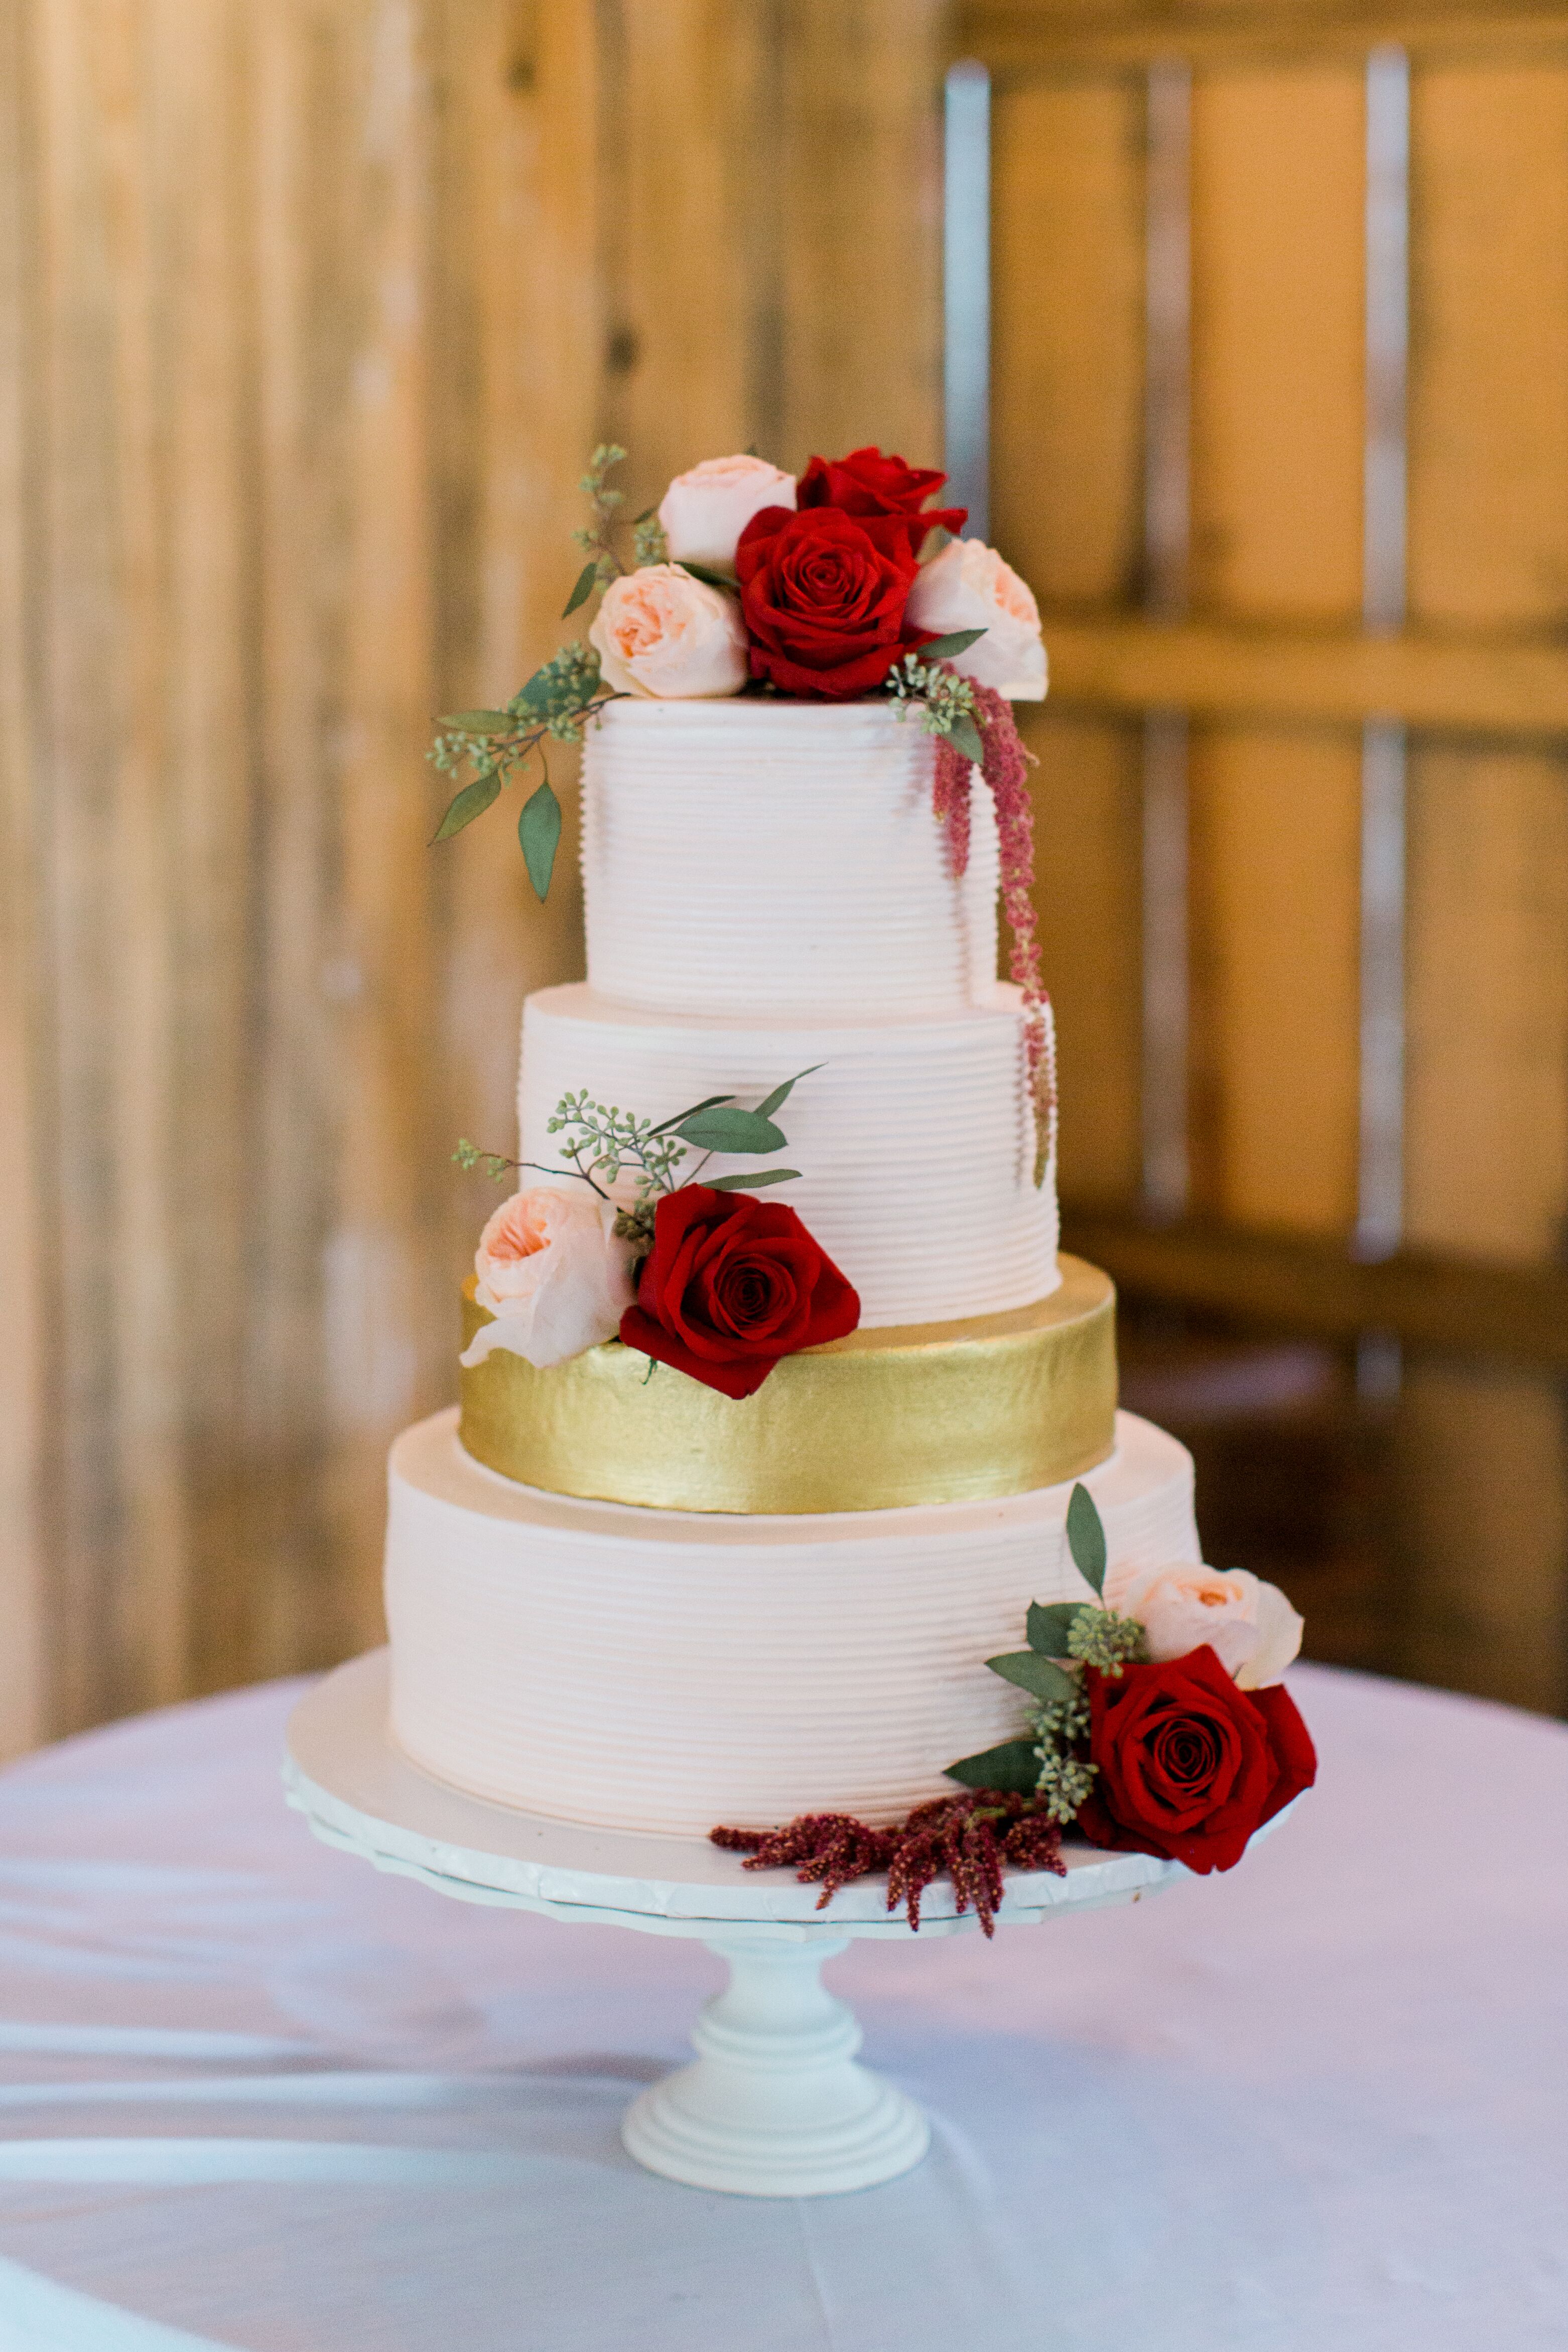 An Unforgettable Floral Wedding Cake